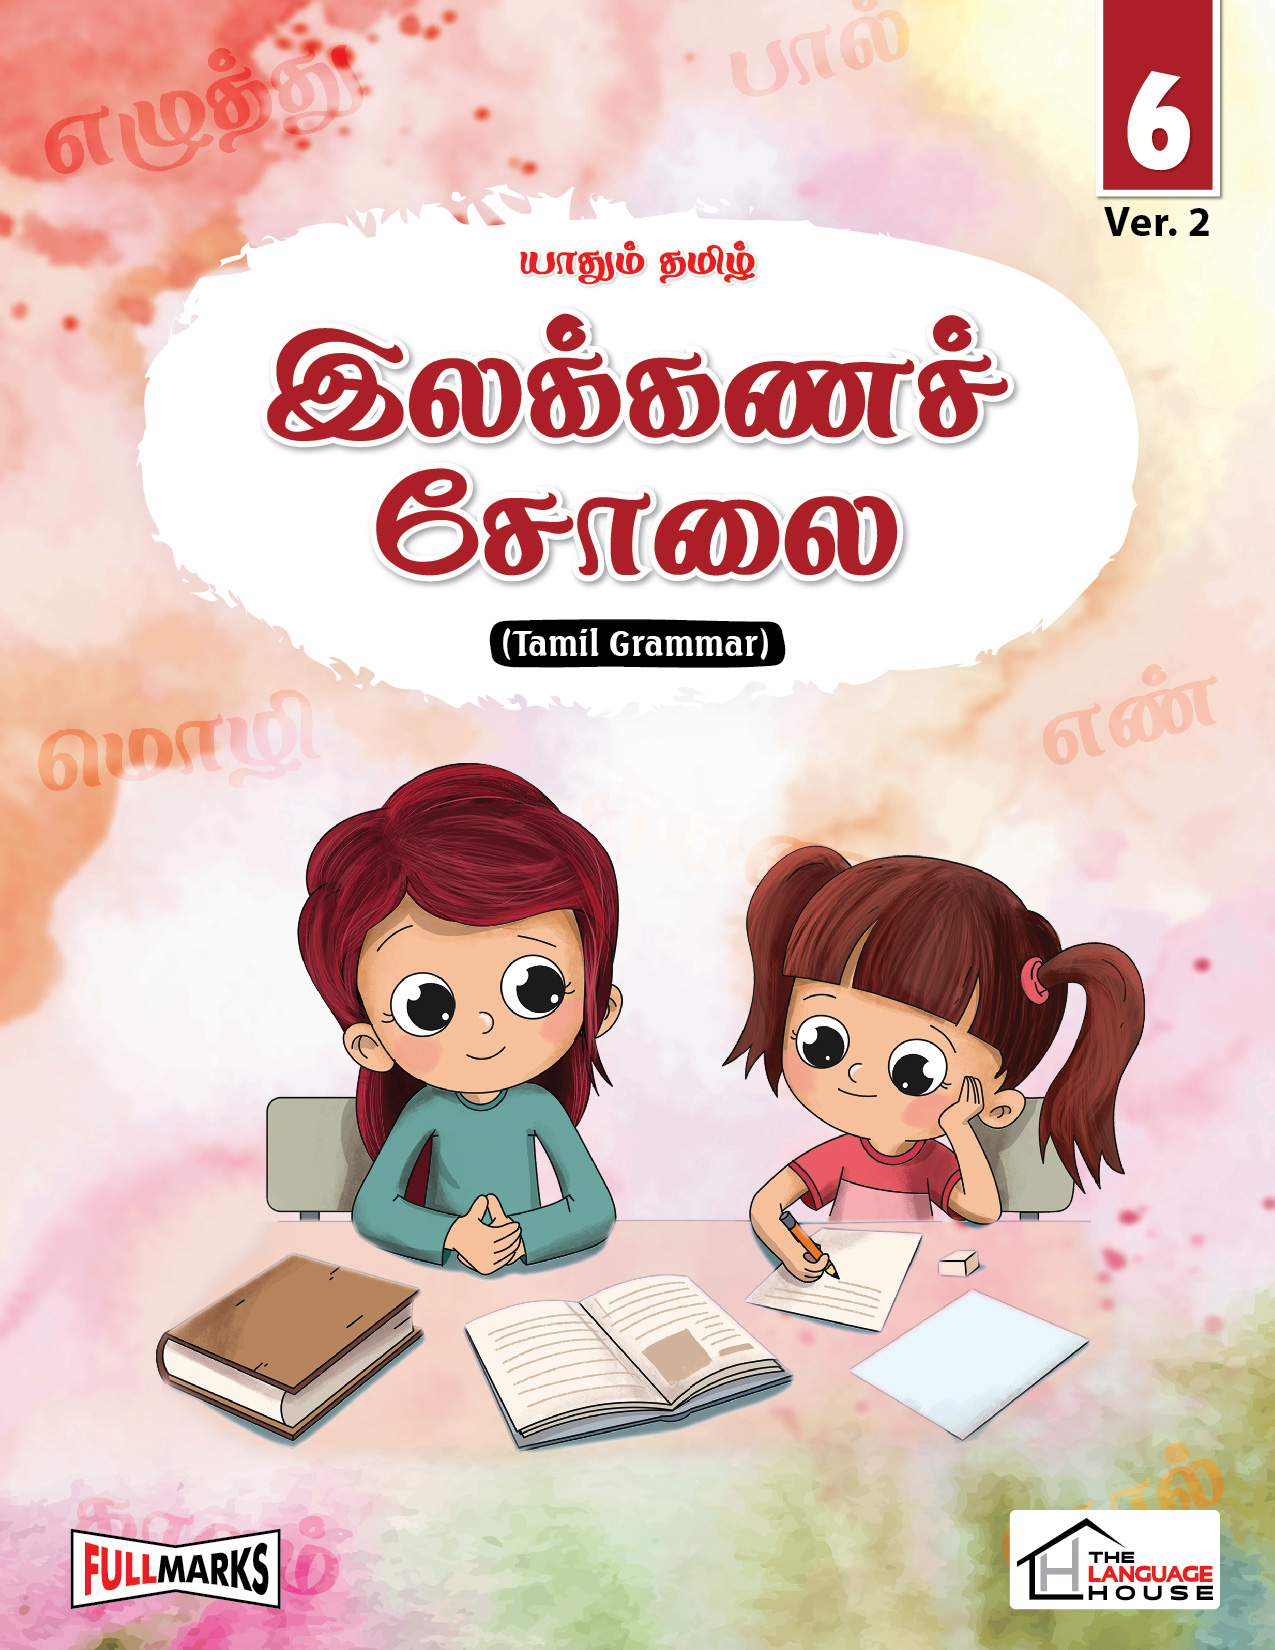 Tamil Grammar Ver. 2 Class 6